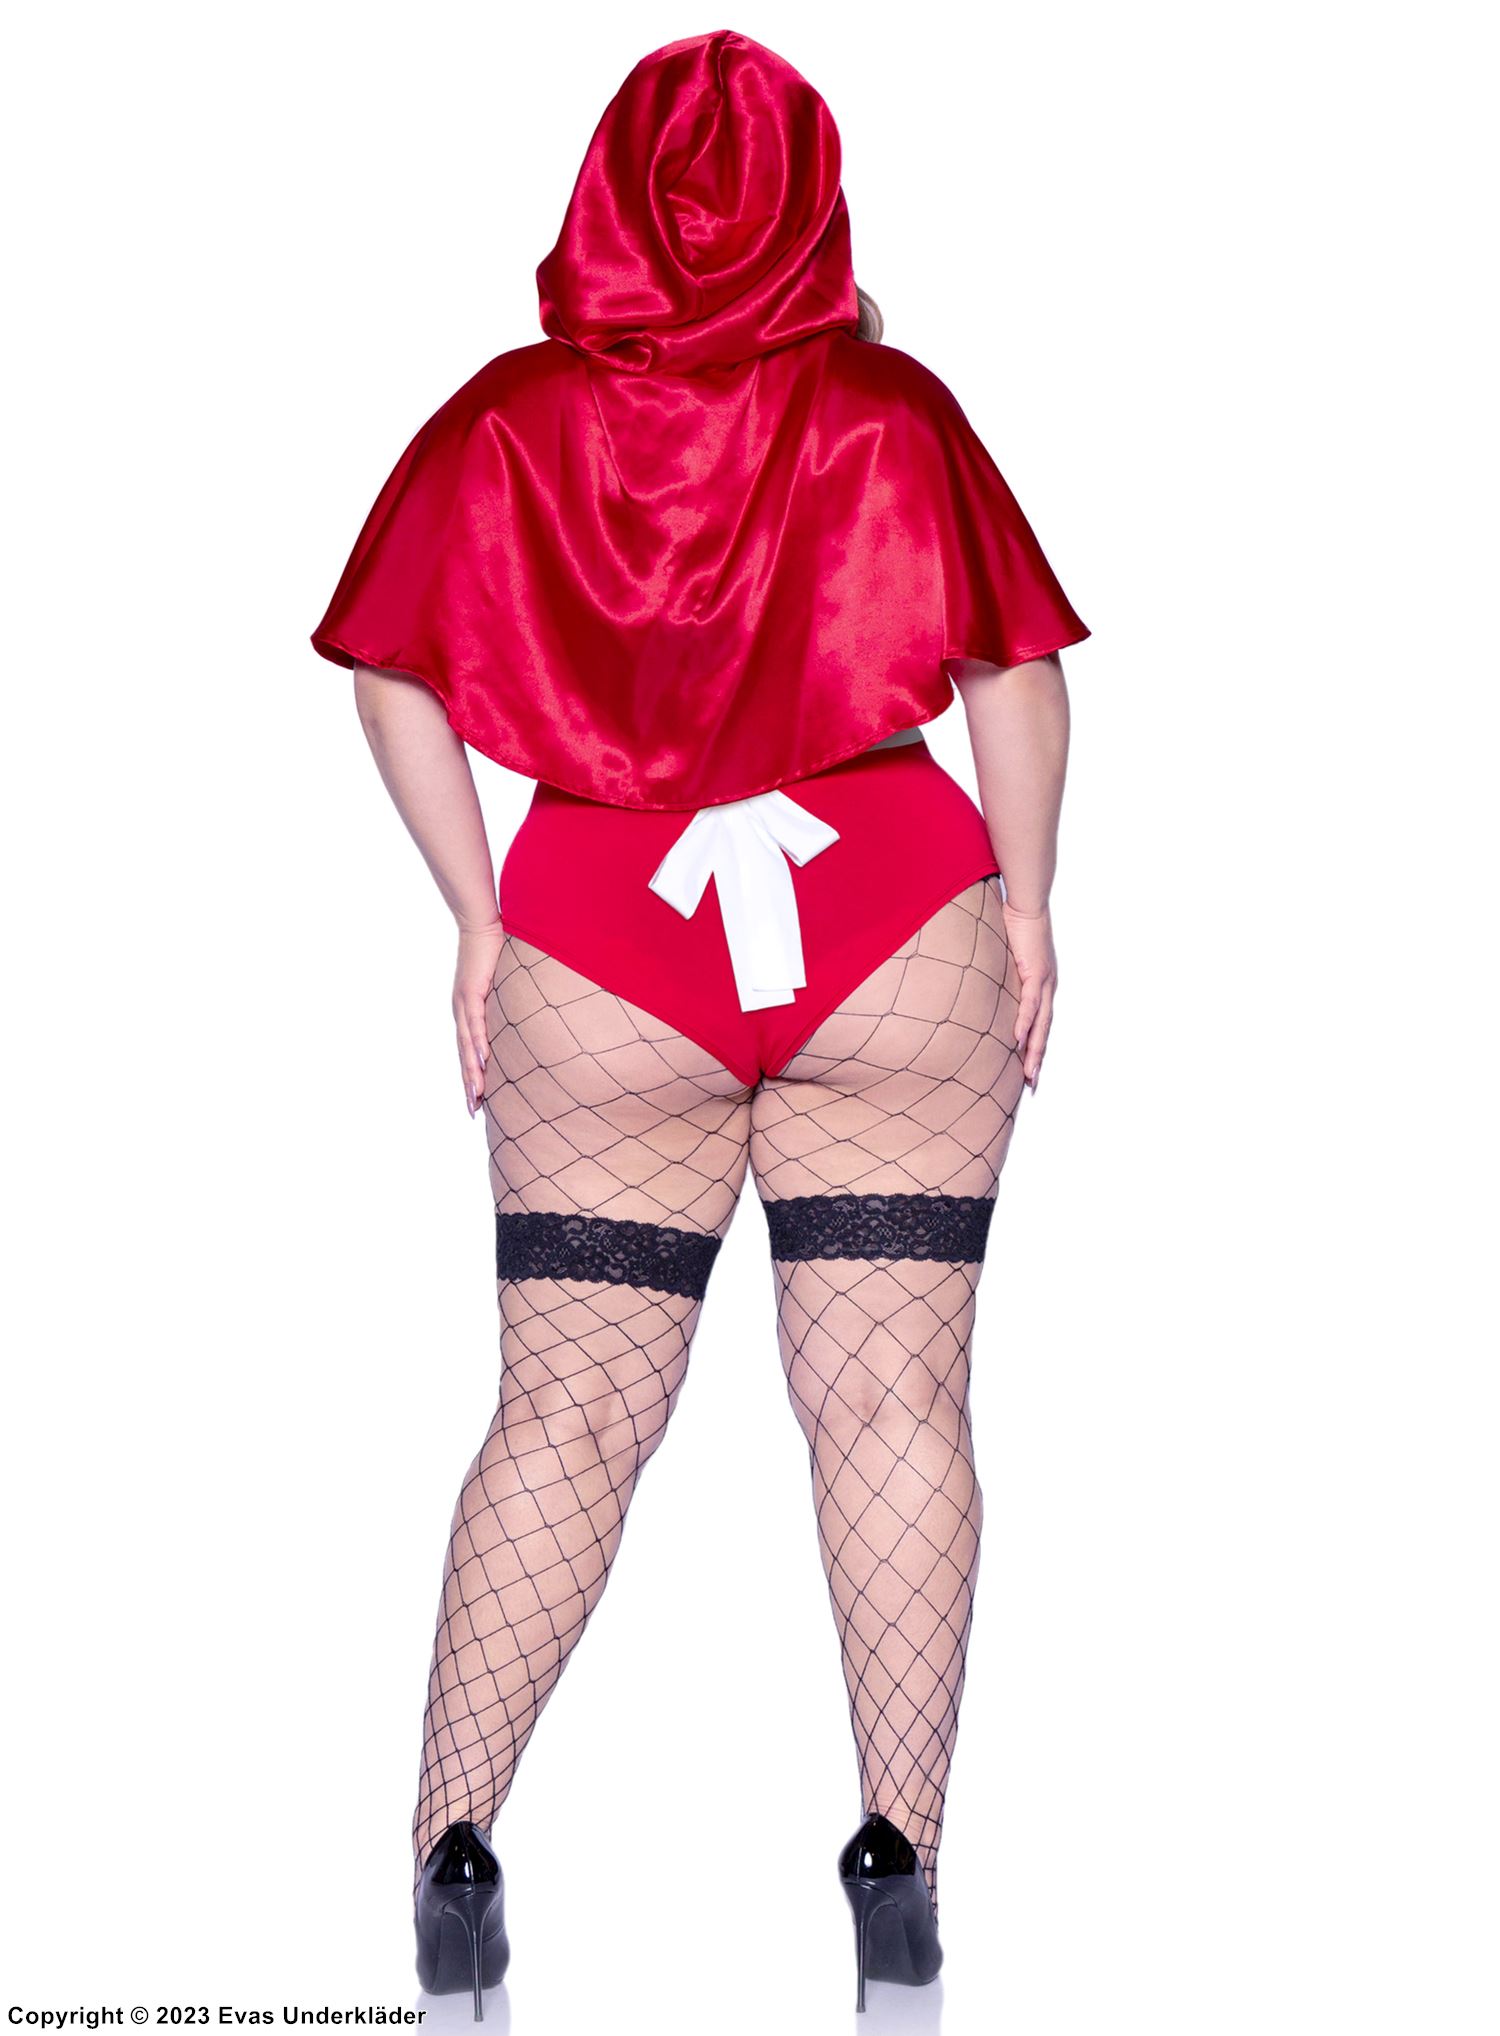 Red Riding Hood, teddy costume, lacing, ruffle trim, apron, plus size